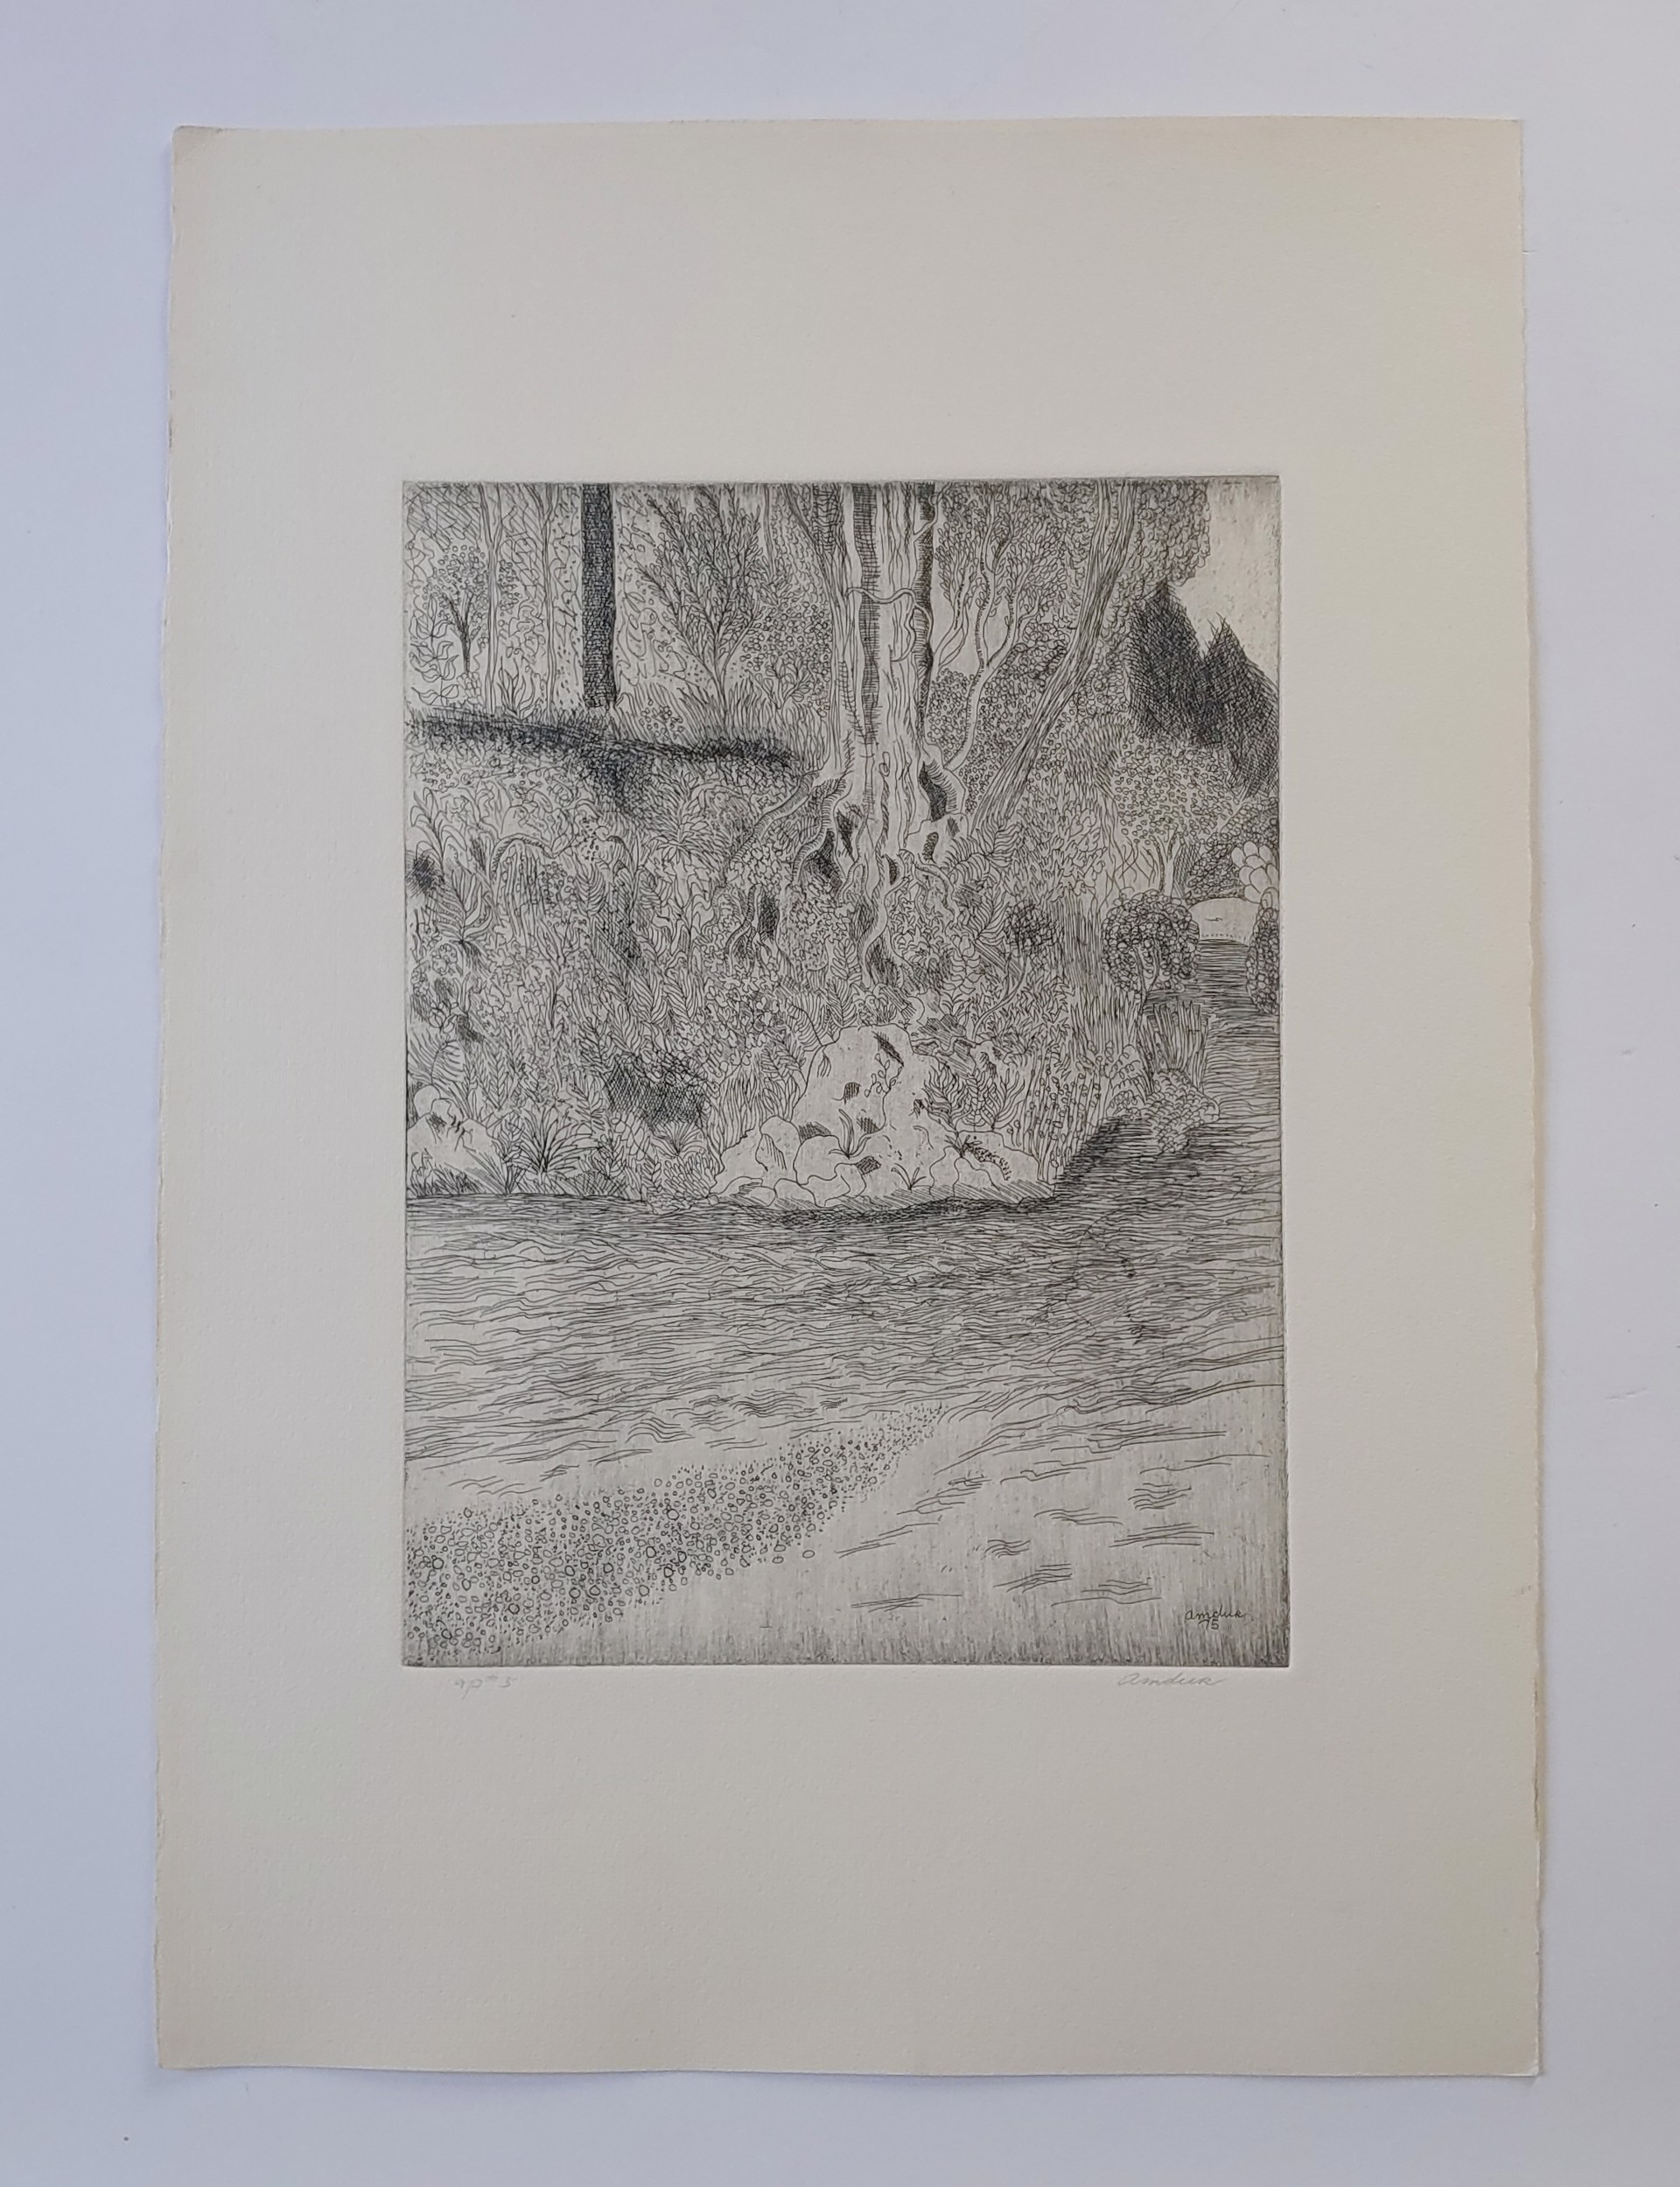 River Rock Prints, signed by David Amdur